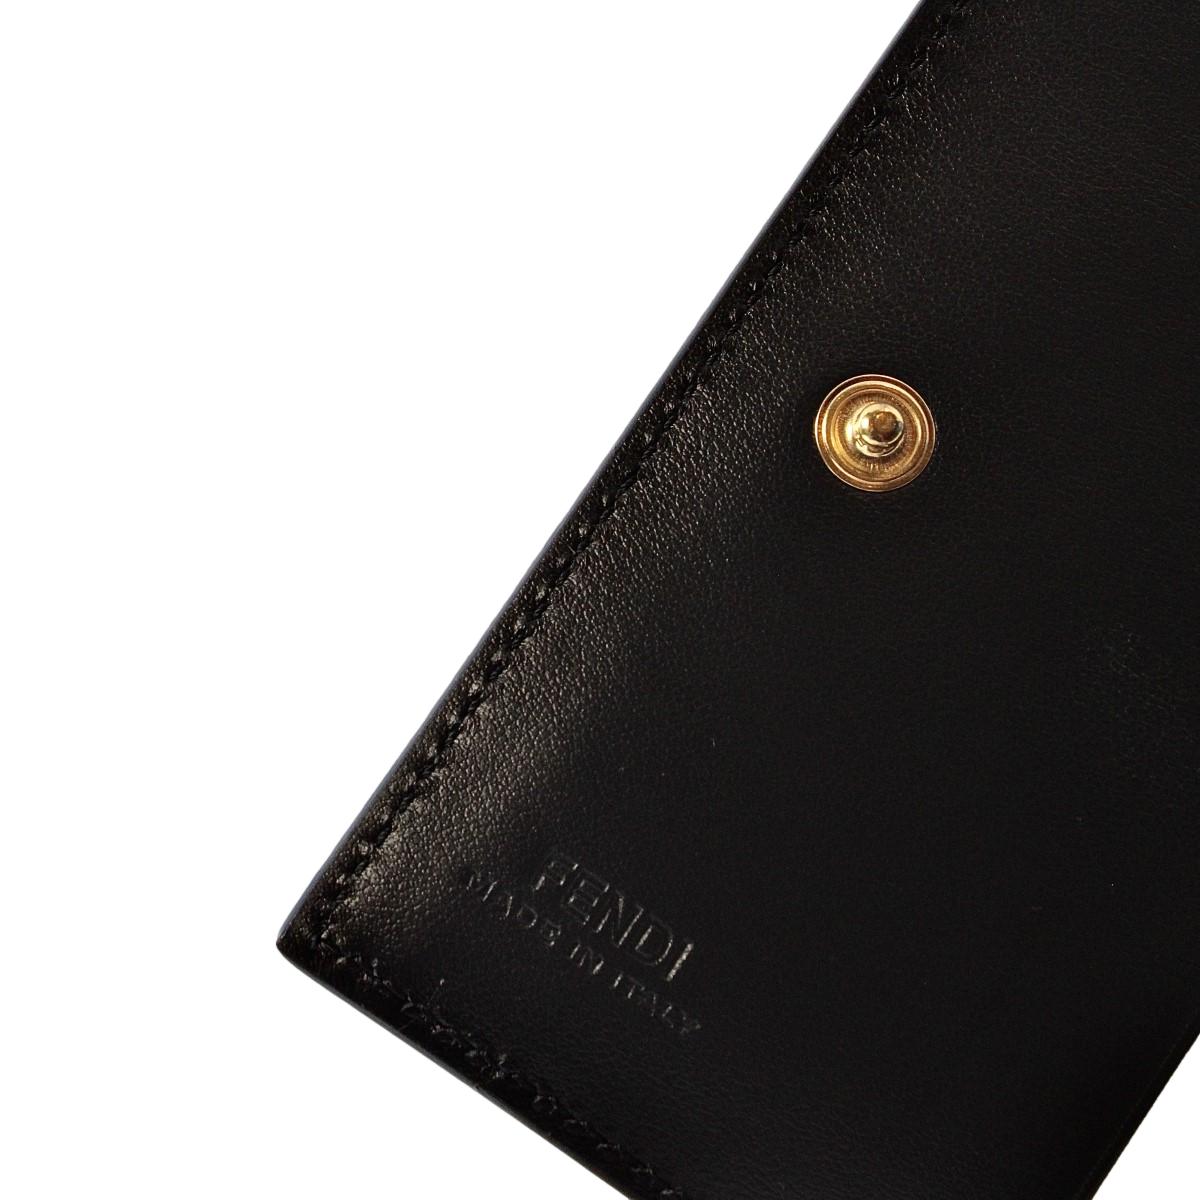 Fendi Calf Leather F Logo Brown Pink Small Bifold Wallet - LUXURYMRKT